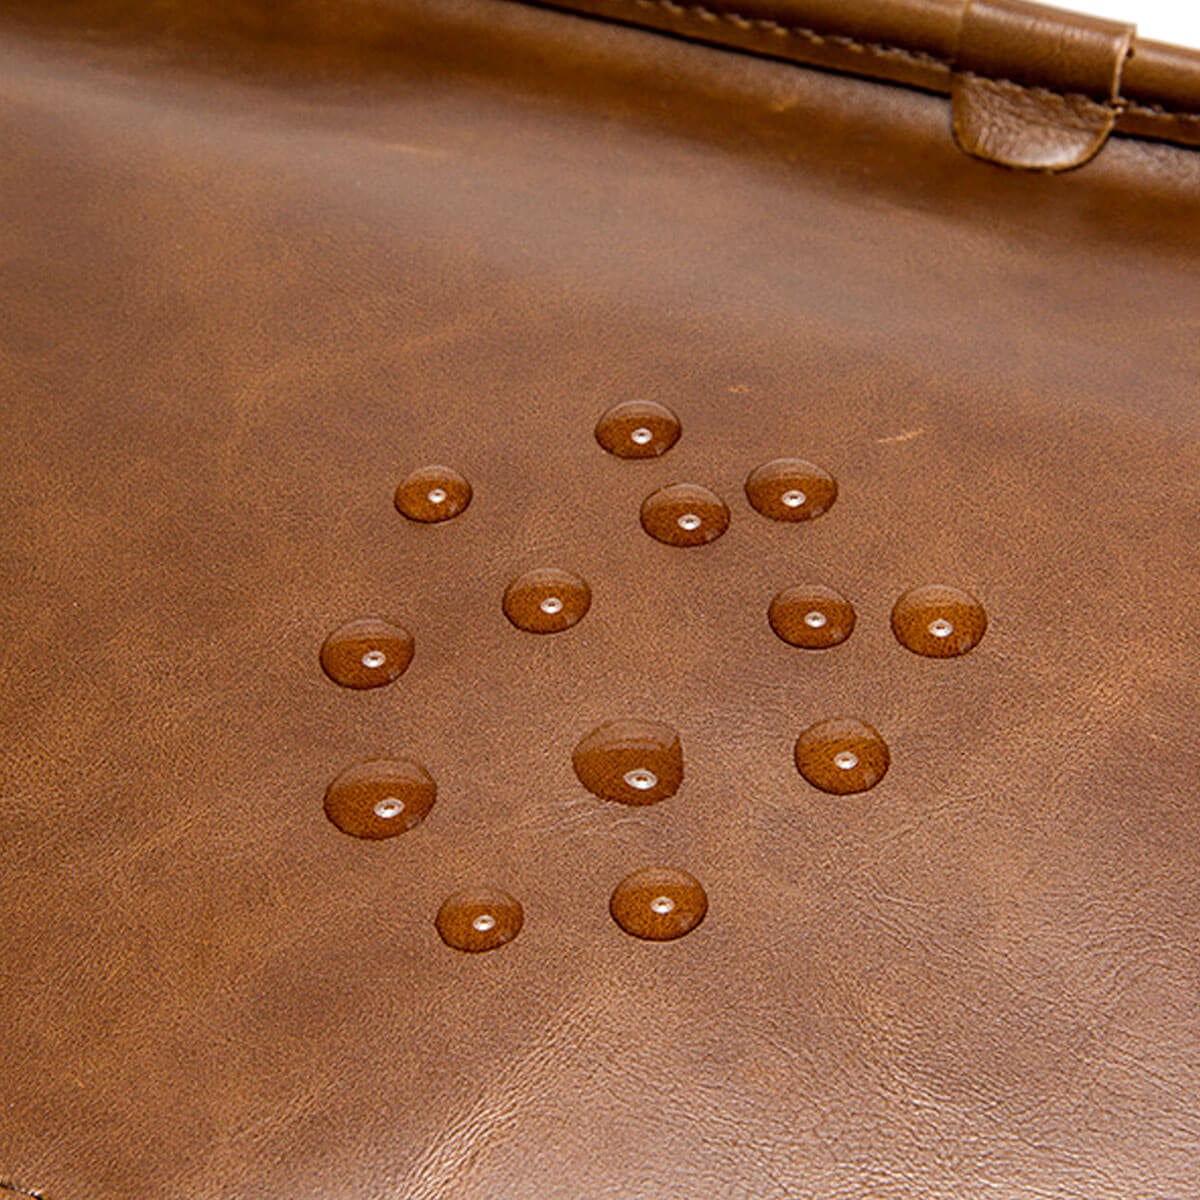 Leather Vintage Luxury Shoulder Laptop Briefcase